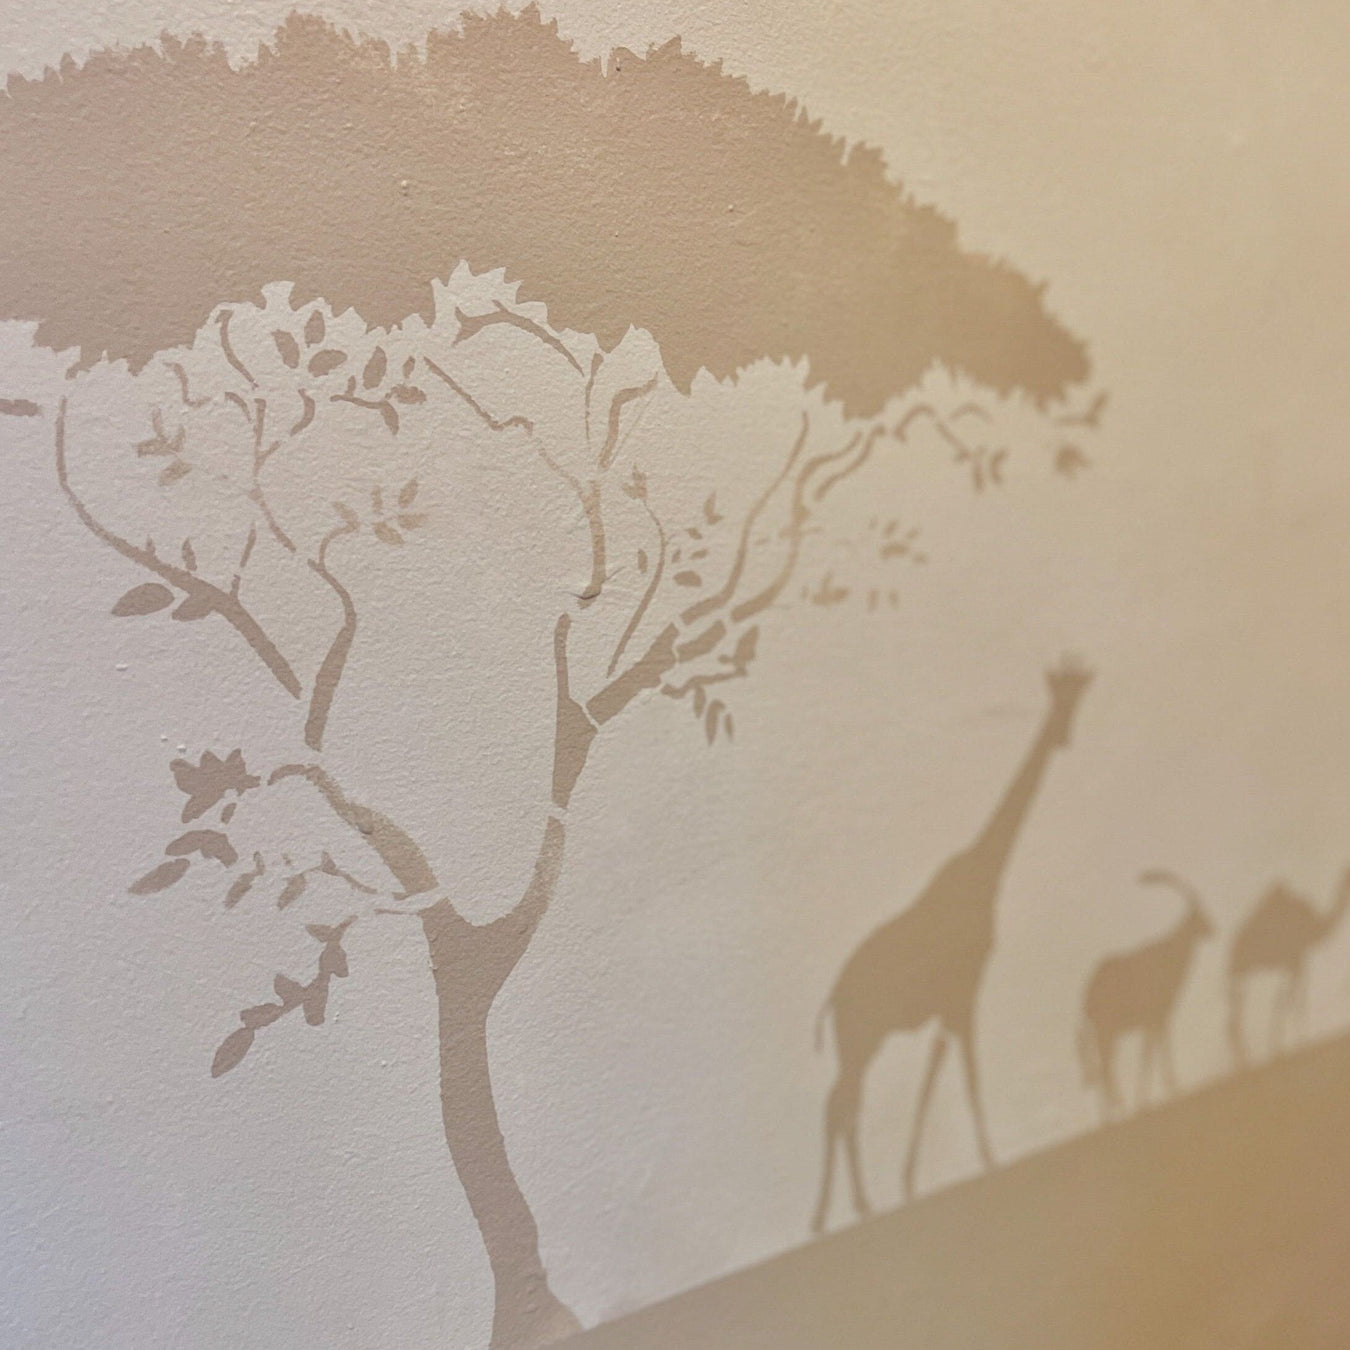 Savanhah tree and Safari animals pattern painted on wall